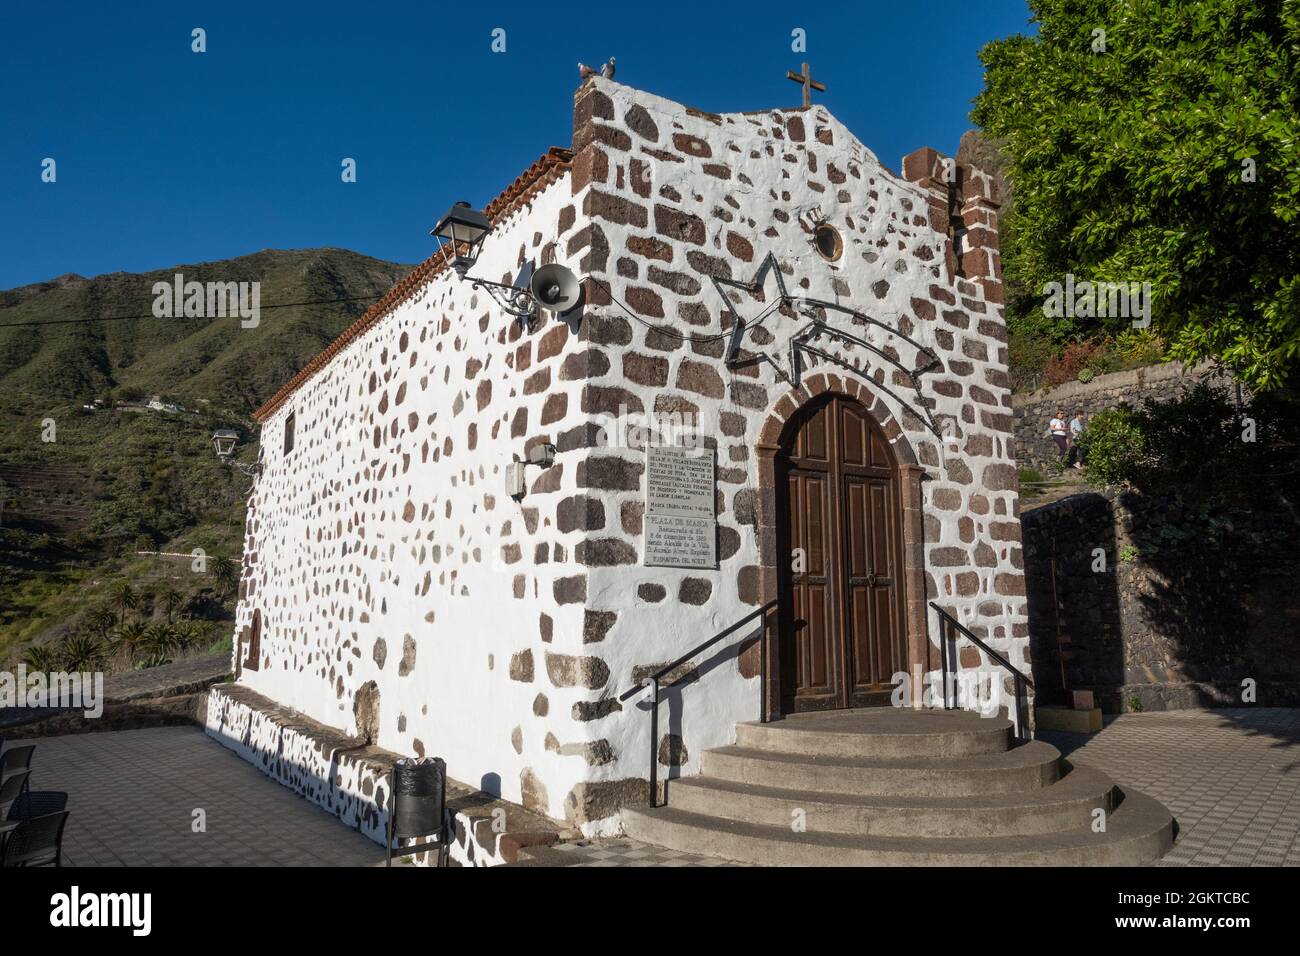 Masca, Tenerife, Spain - 04 January, 2020. Small Church in Masca village, Tenerife. Stock Photo